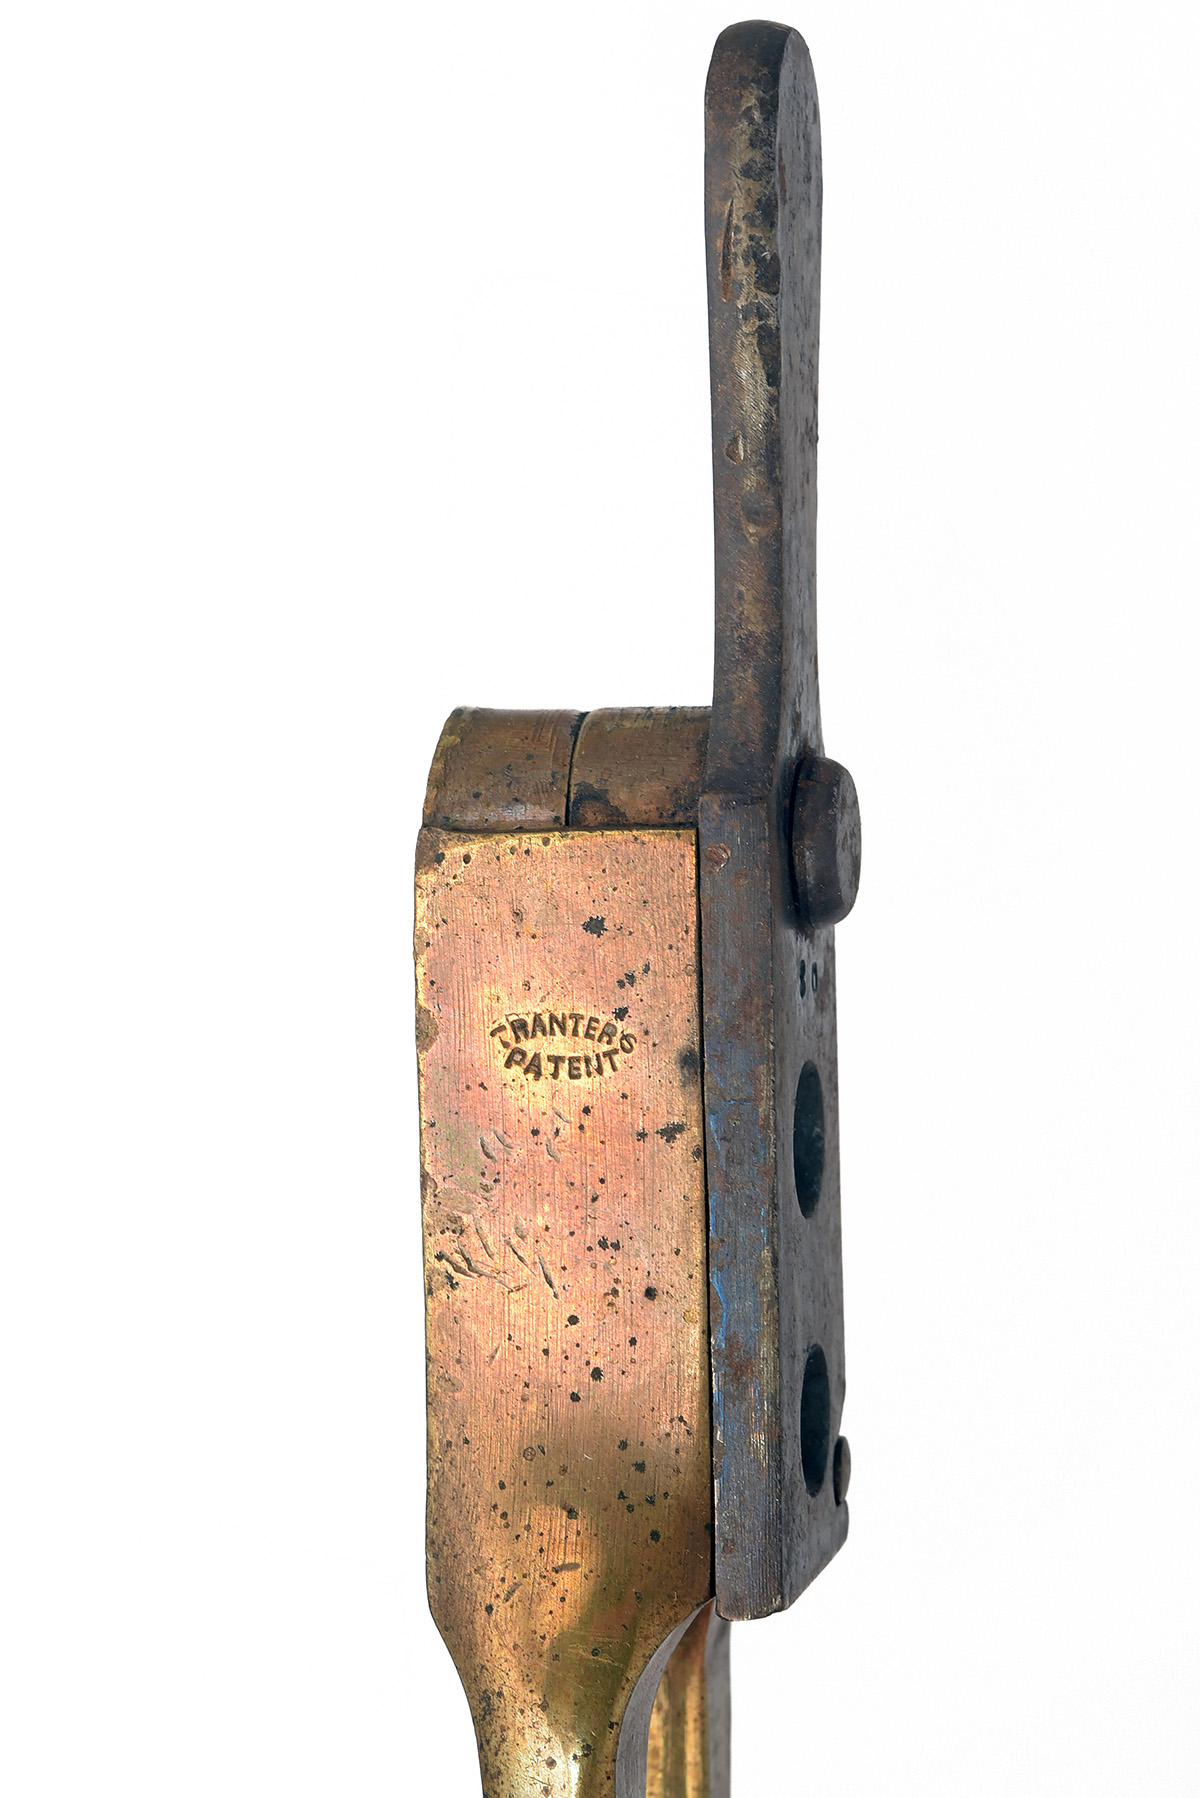 A CASED 80-BORE TRANTER THIRD MODEL DOUBLE TRIGGER PERCUSSION REVOLVER, CIRCA 1860, serial no. - Image 6 of 8